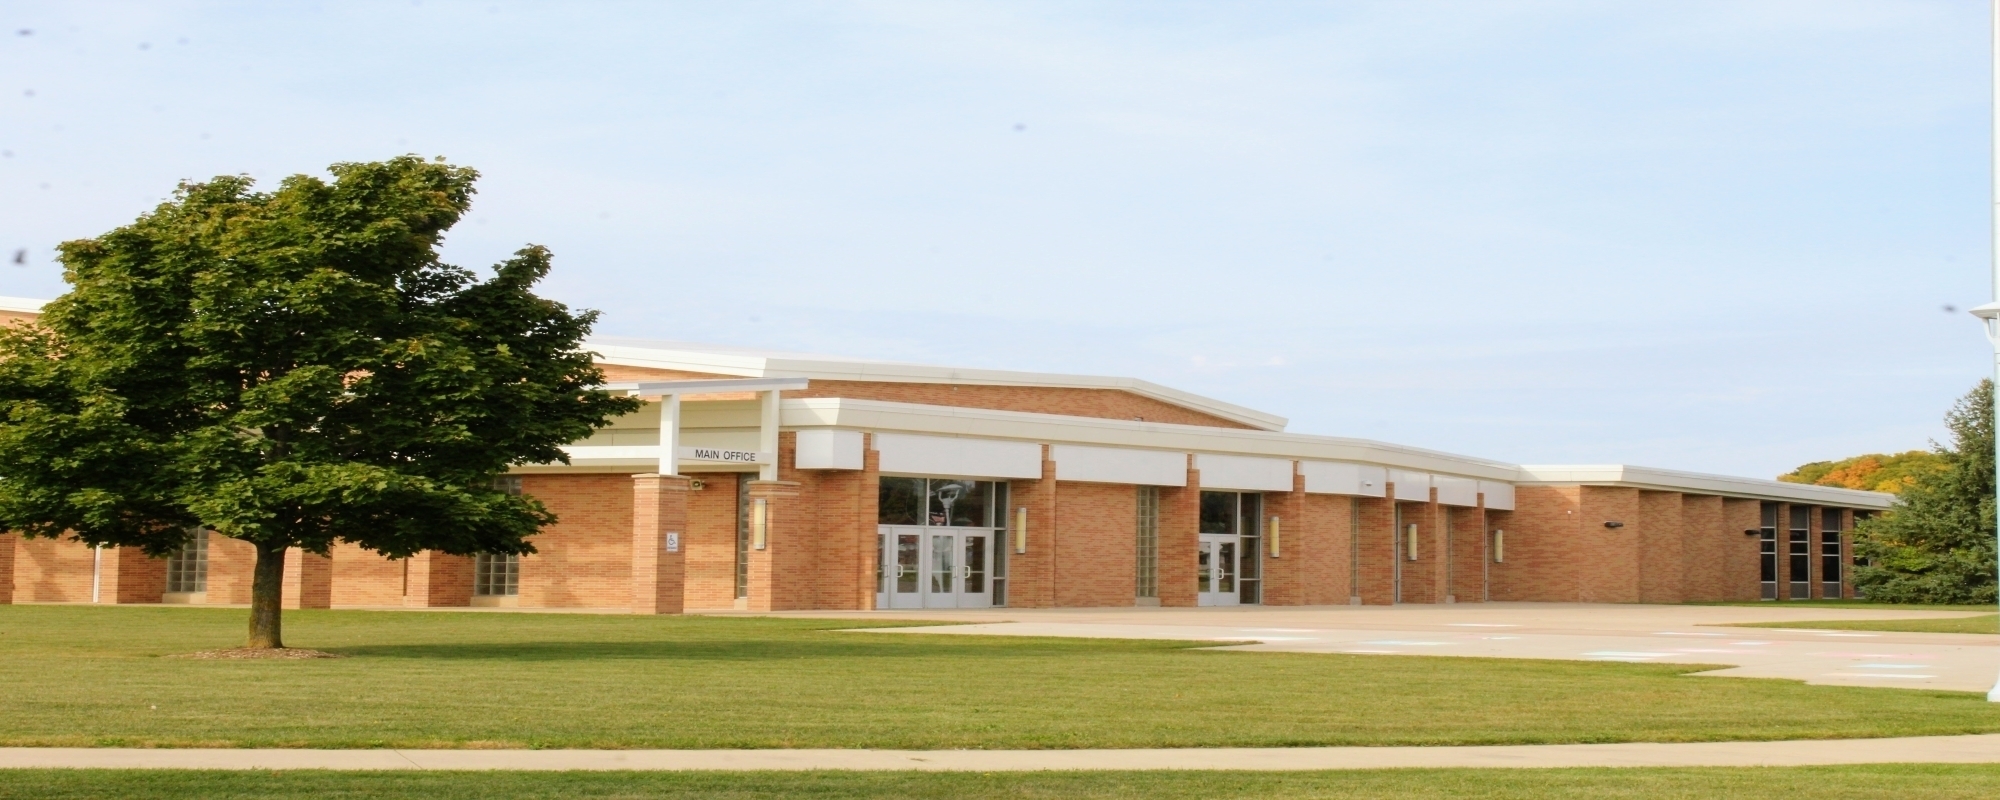 Photo of St. Johns High School Entrance